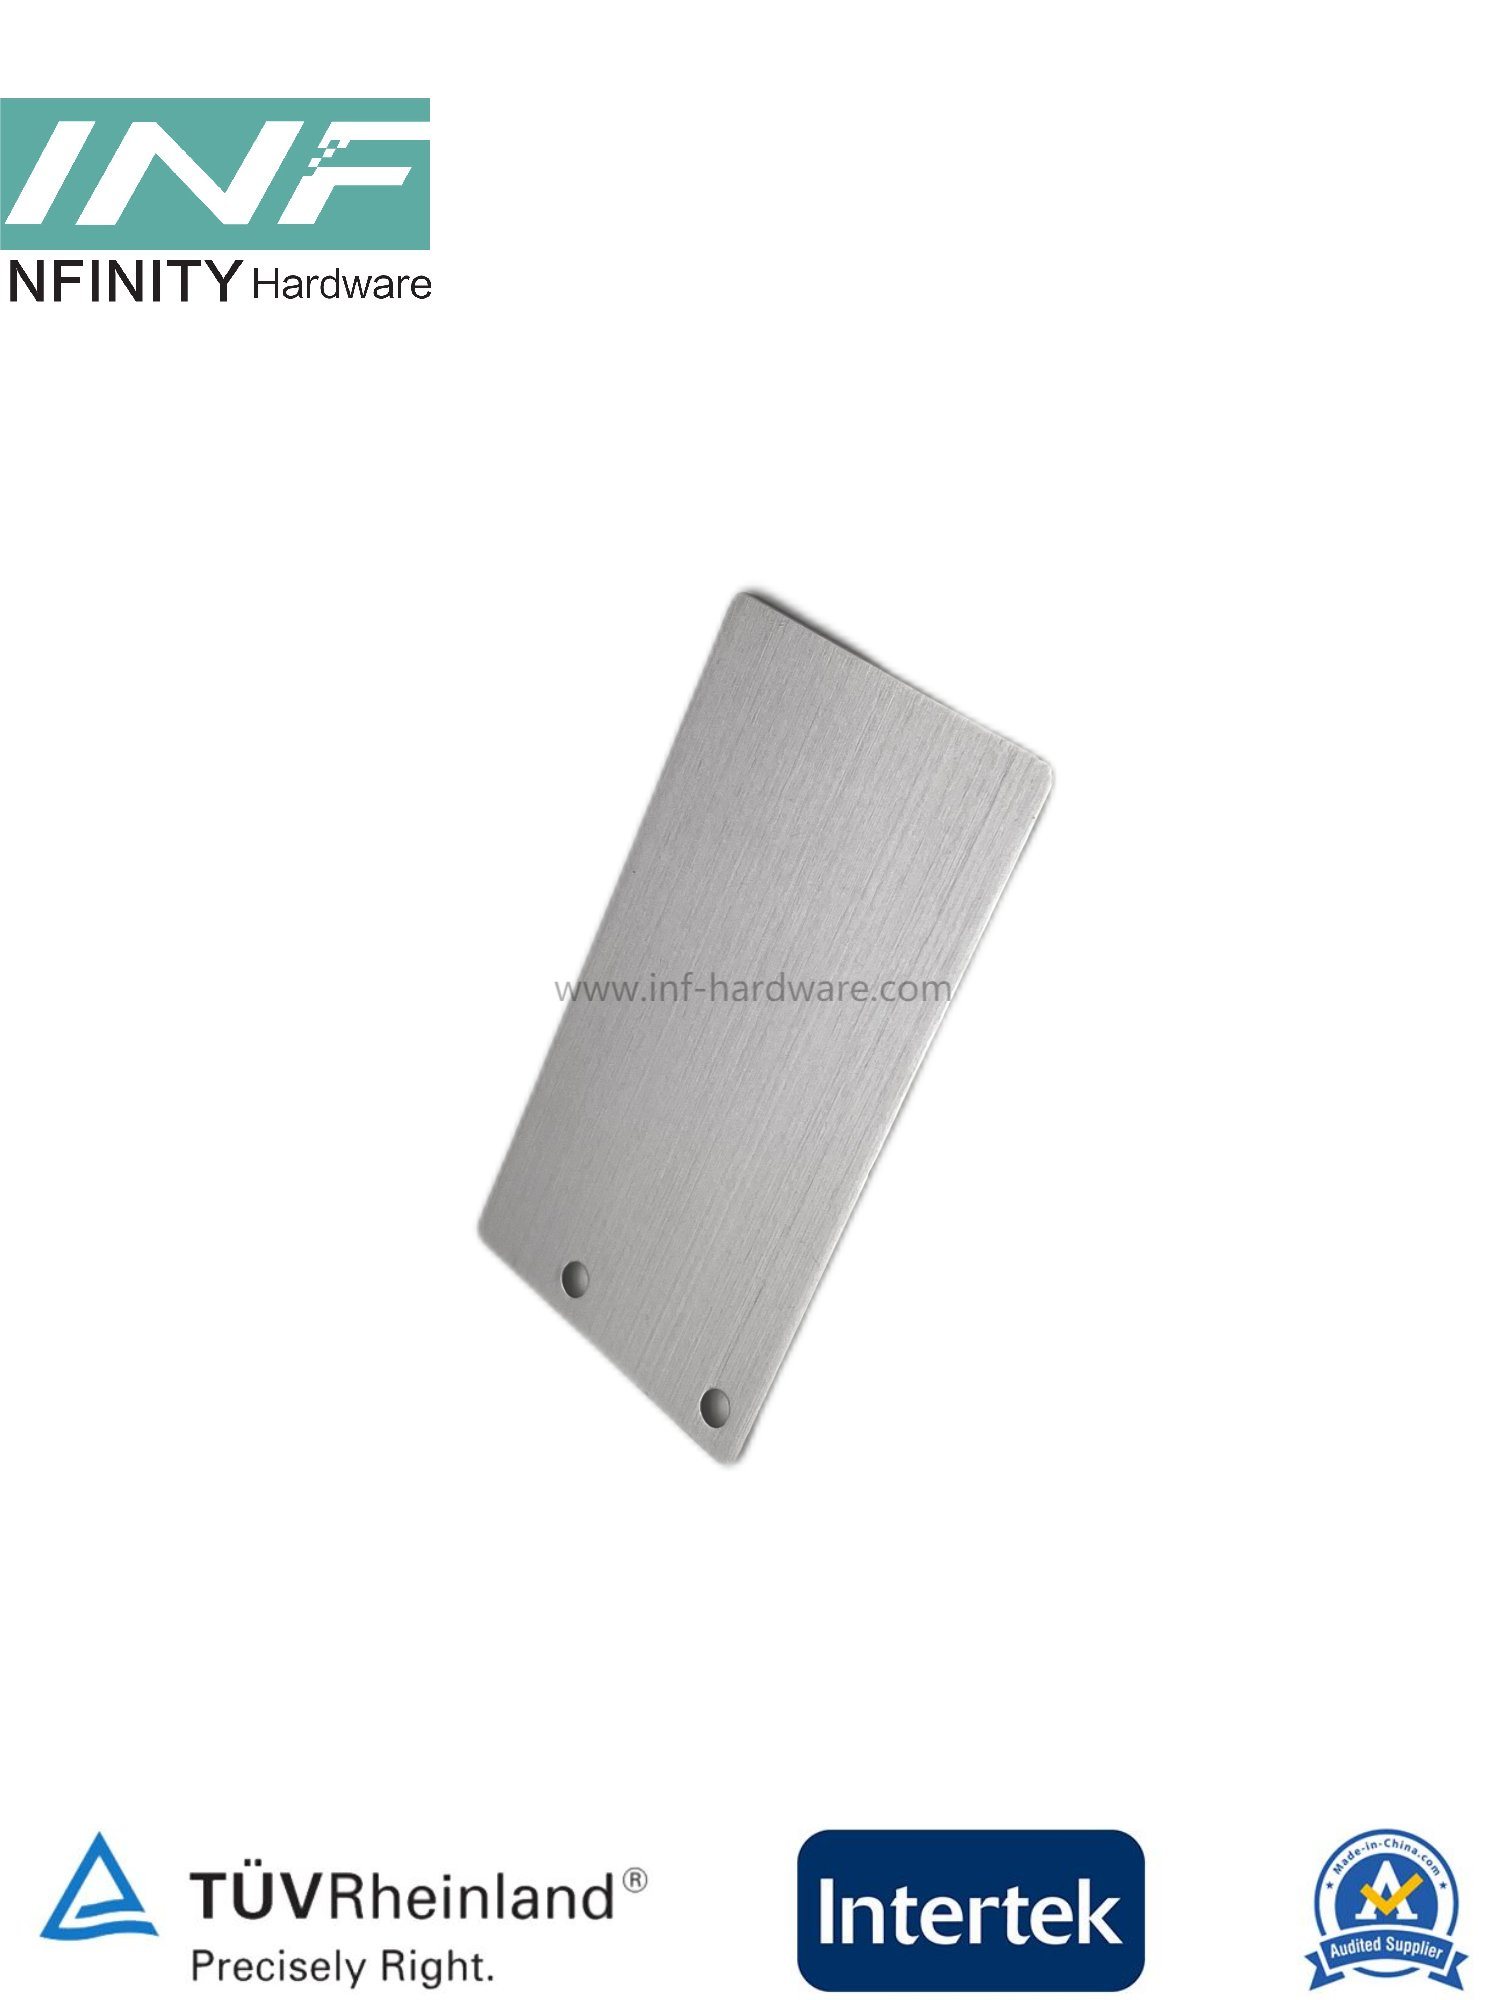 Aluminum End Cover for Soft Closing Sliding Door System Im-GS-3 Top Track